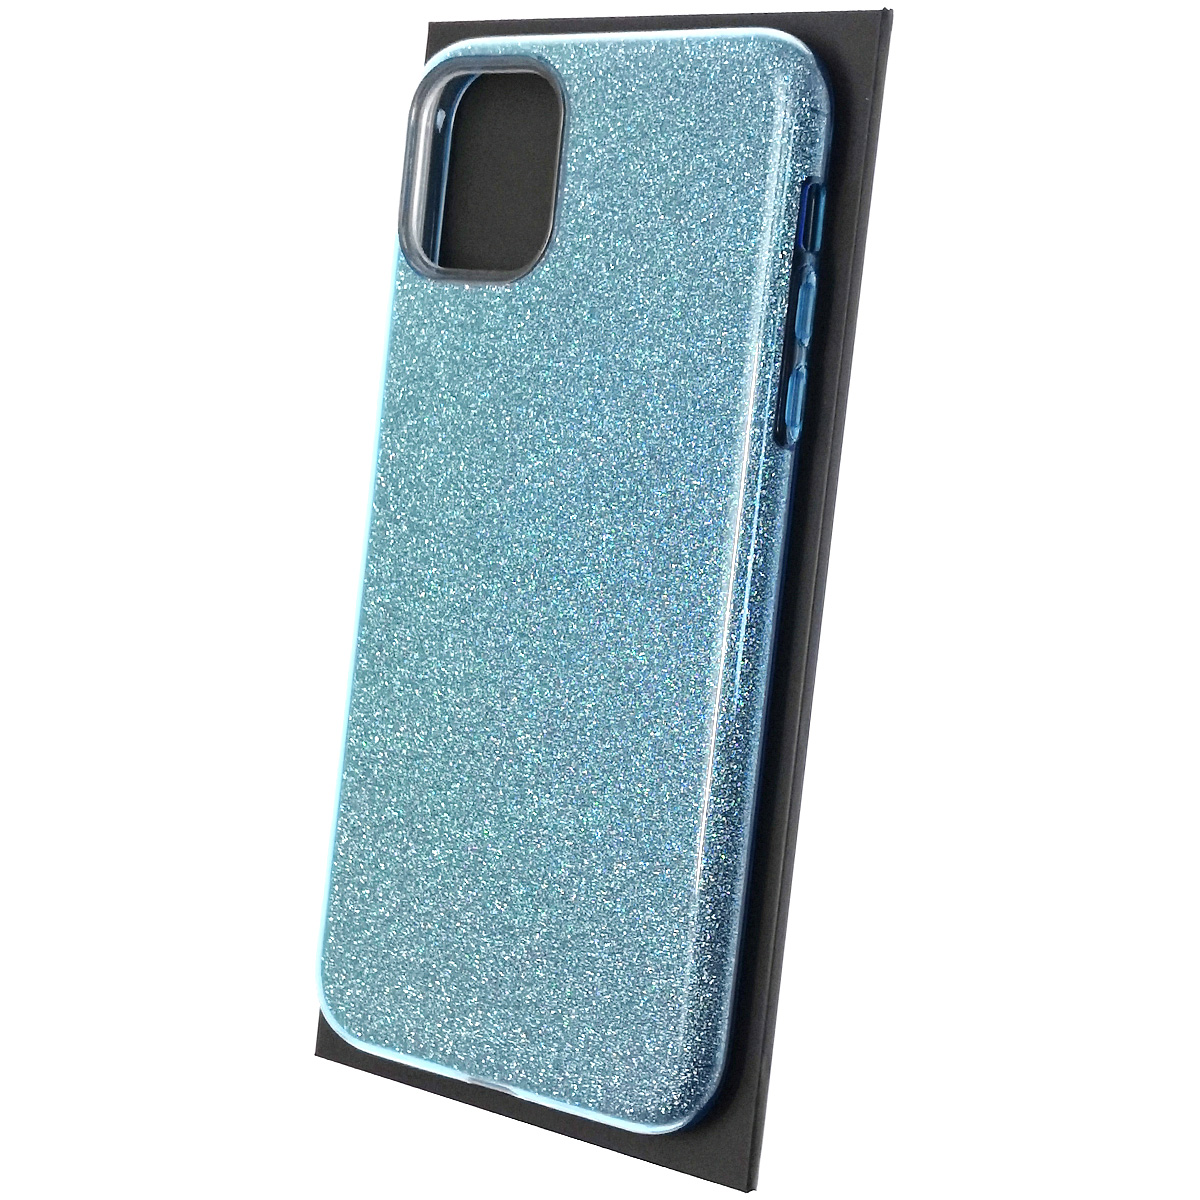 Чехол накладка Shine для APPLE iPhone 11 Pro Max 2019, силикон, блестки, цвет голубой.